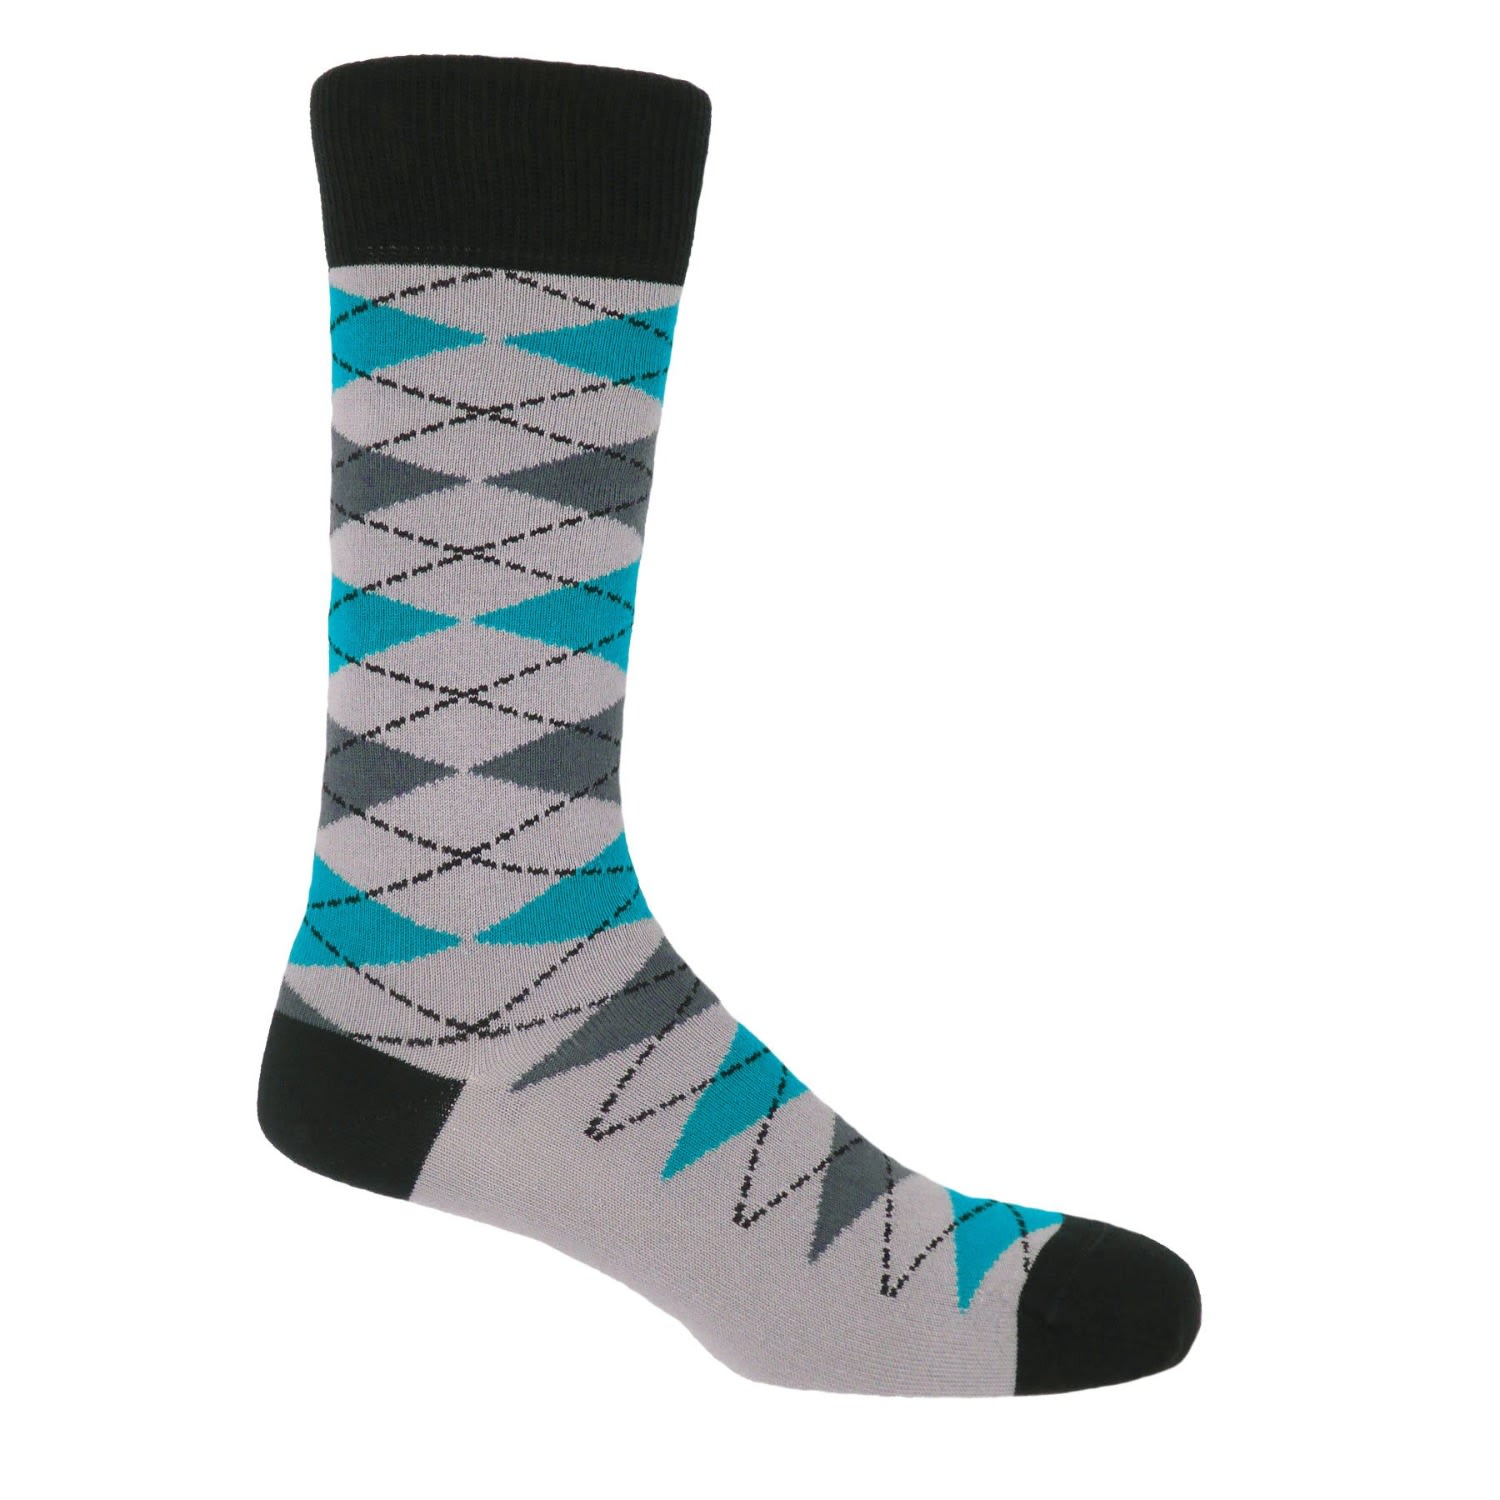 Grey Argyle Men’s Socks One Size Peper Harow - Made in England